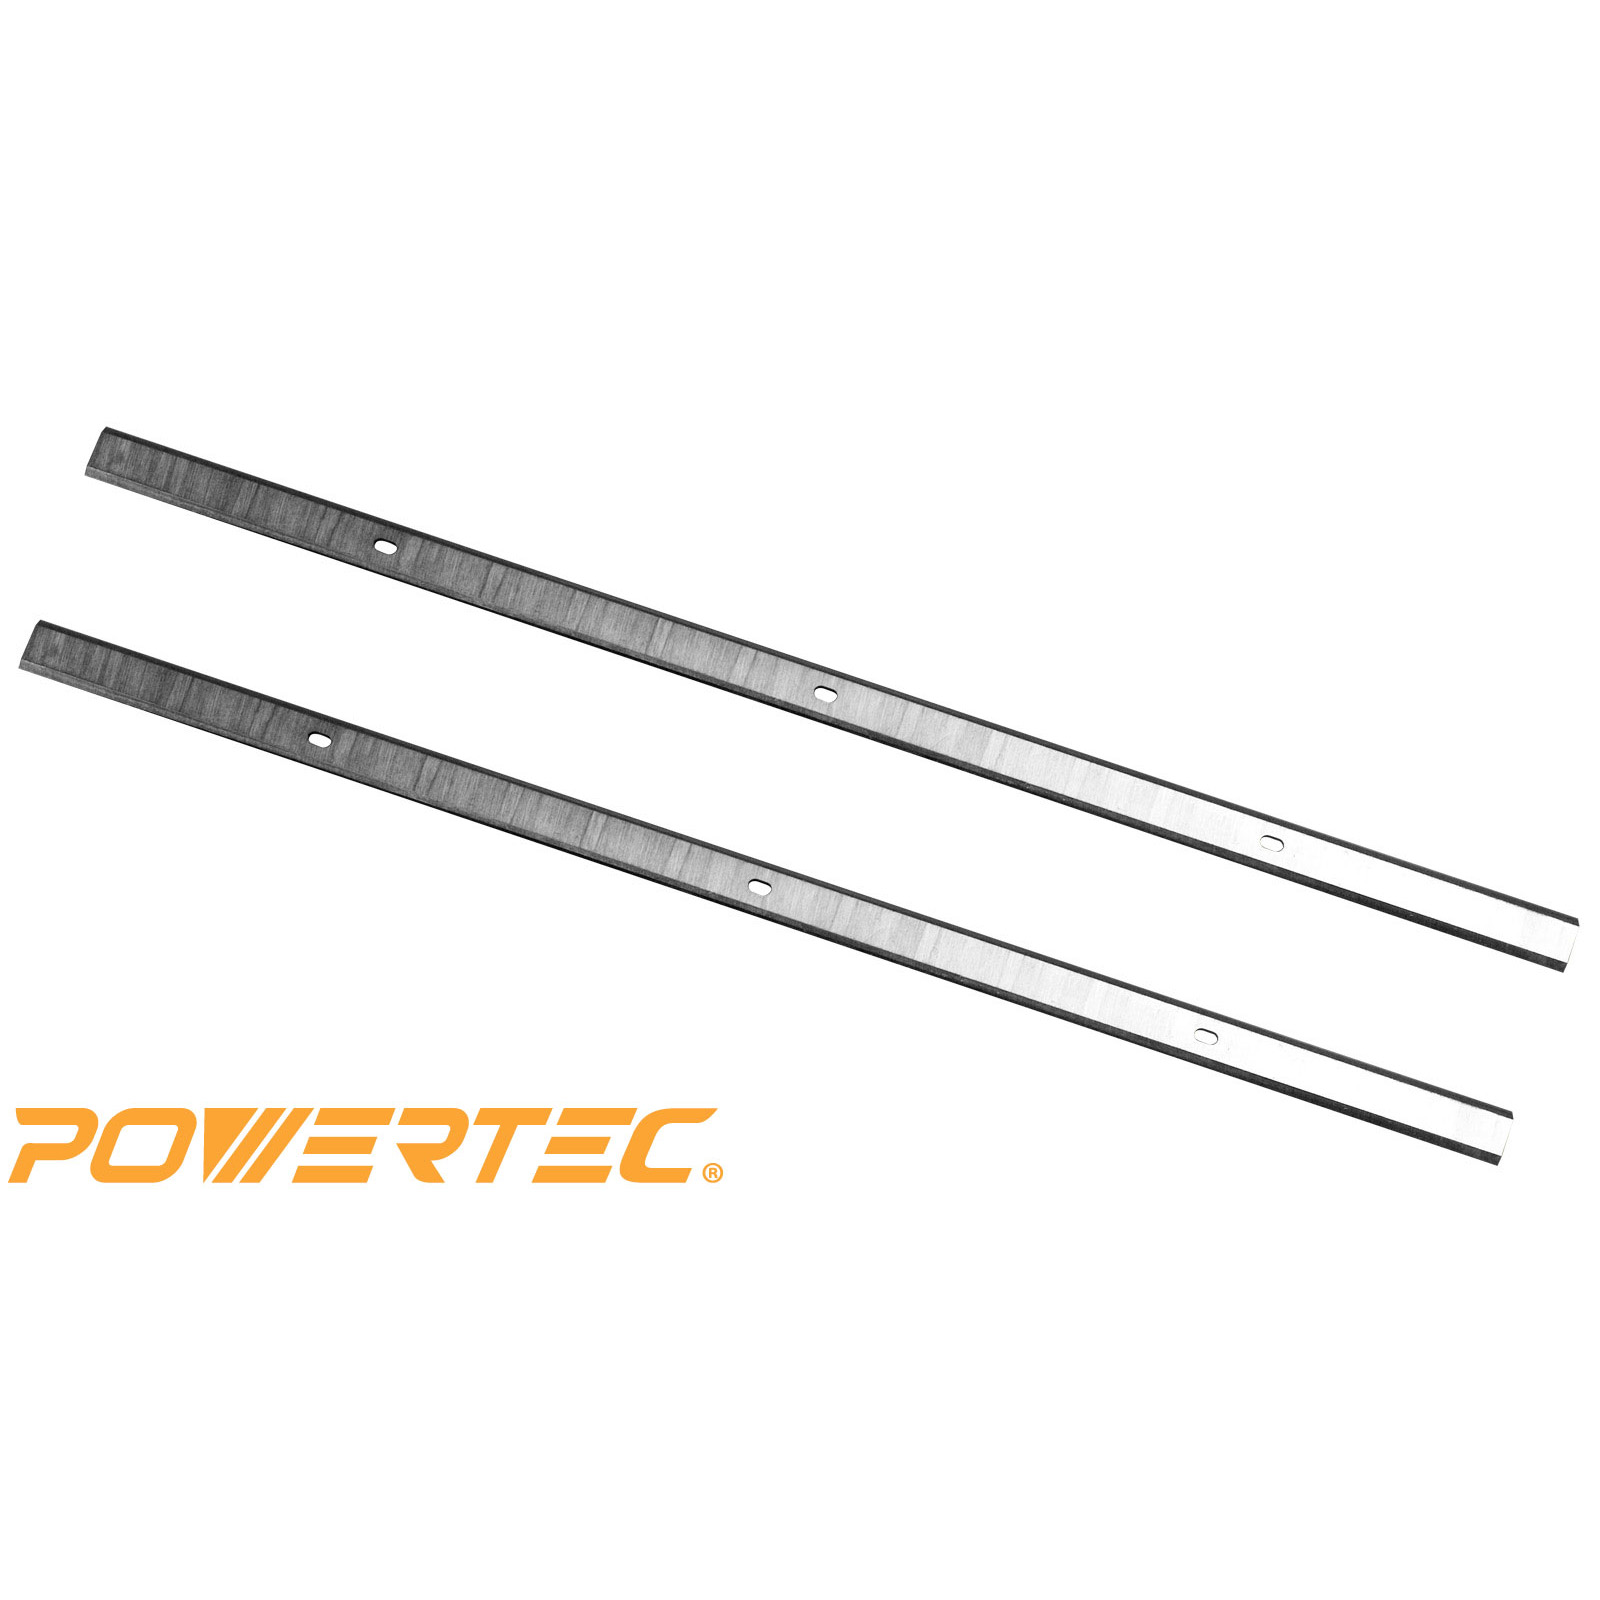 Powertec 128030 12-1/2-Inch Planer Knives for Delta 22-560 / 22-565, HSS, Set of 2